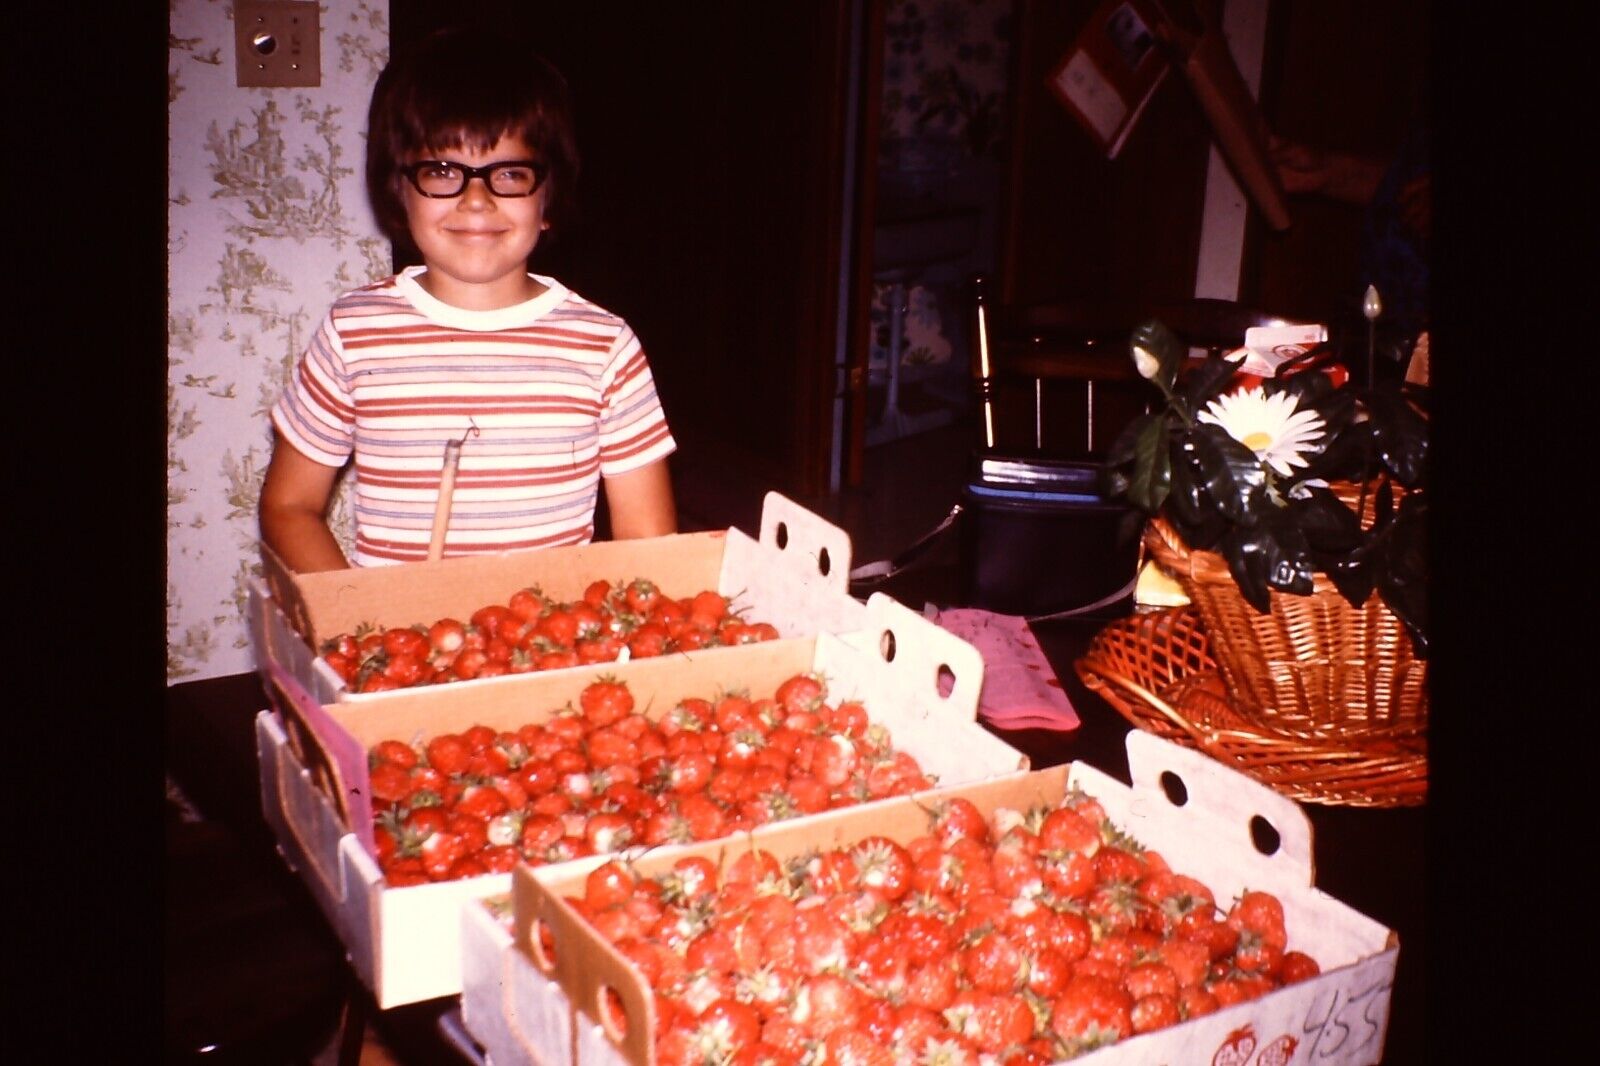 1974 CHILD WITH BOXES OF STRAWBERRYS 1970\'s Vintage 35mm Slide OPL16